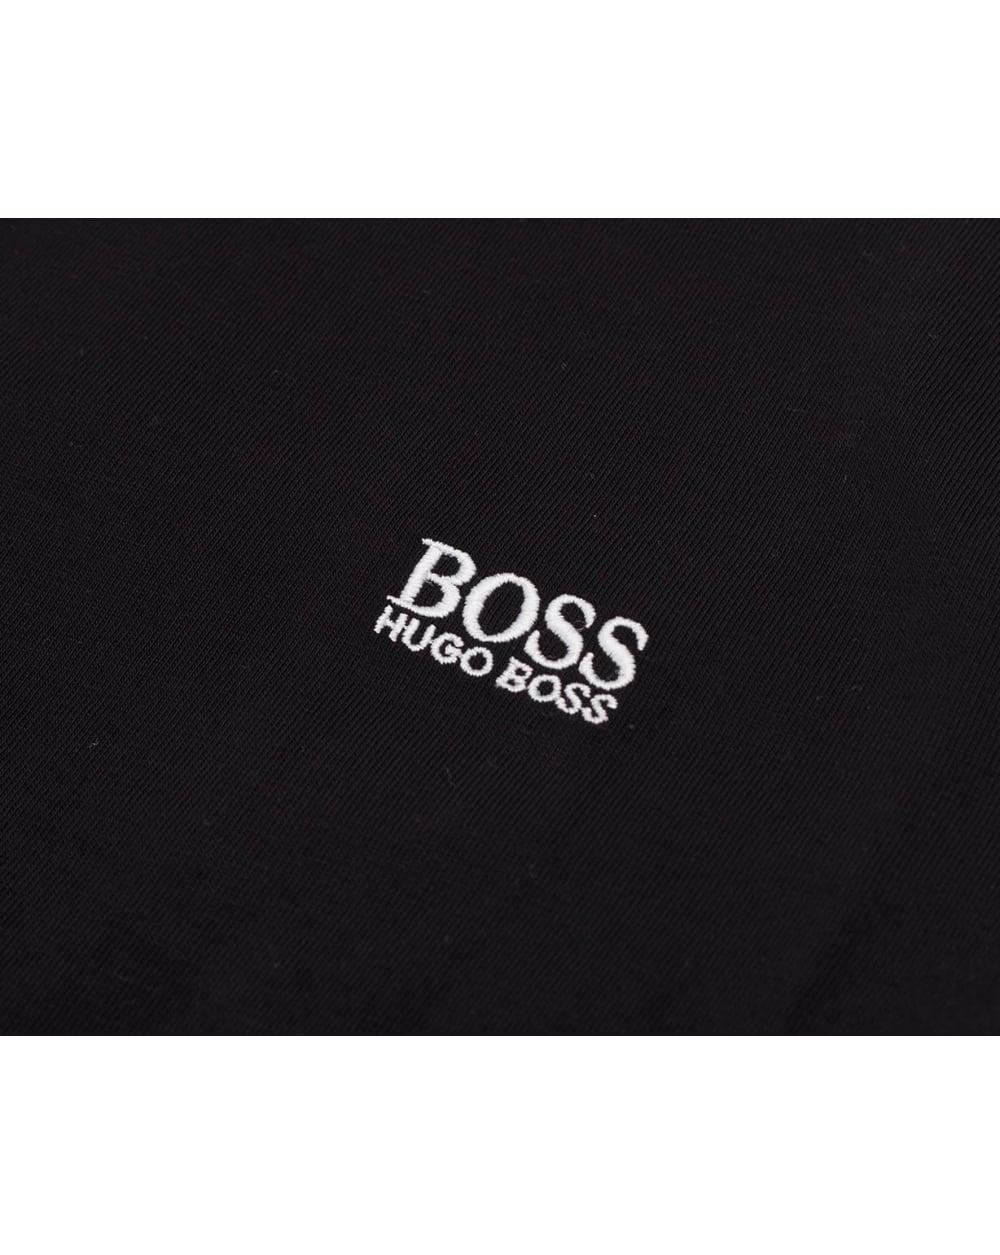 Small Logo - Kids Boss Hugo Boss Small Logo Classic T-shirt | Psyche